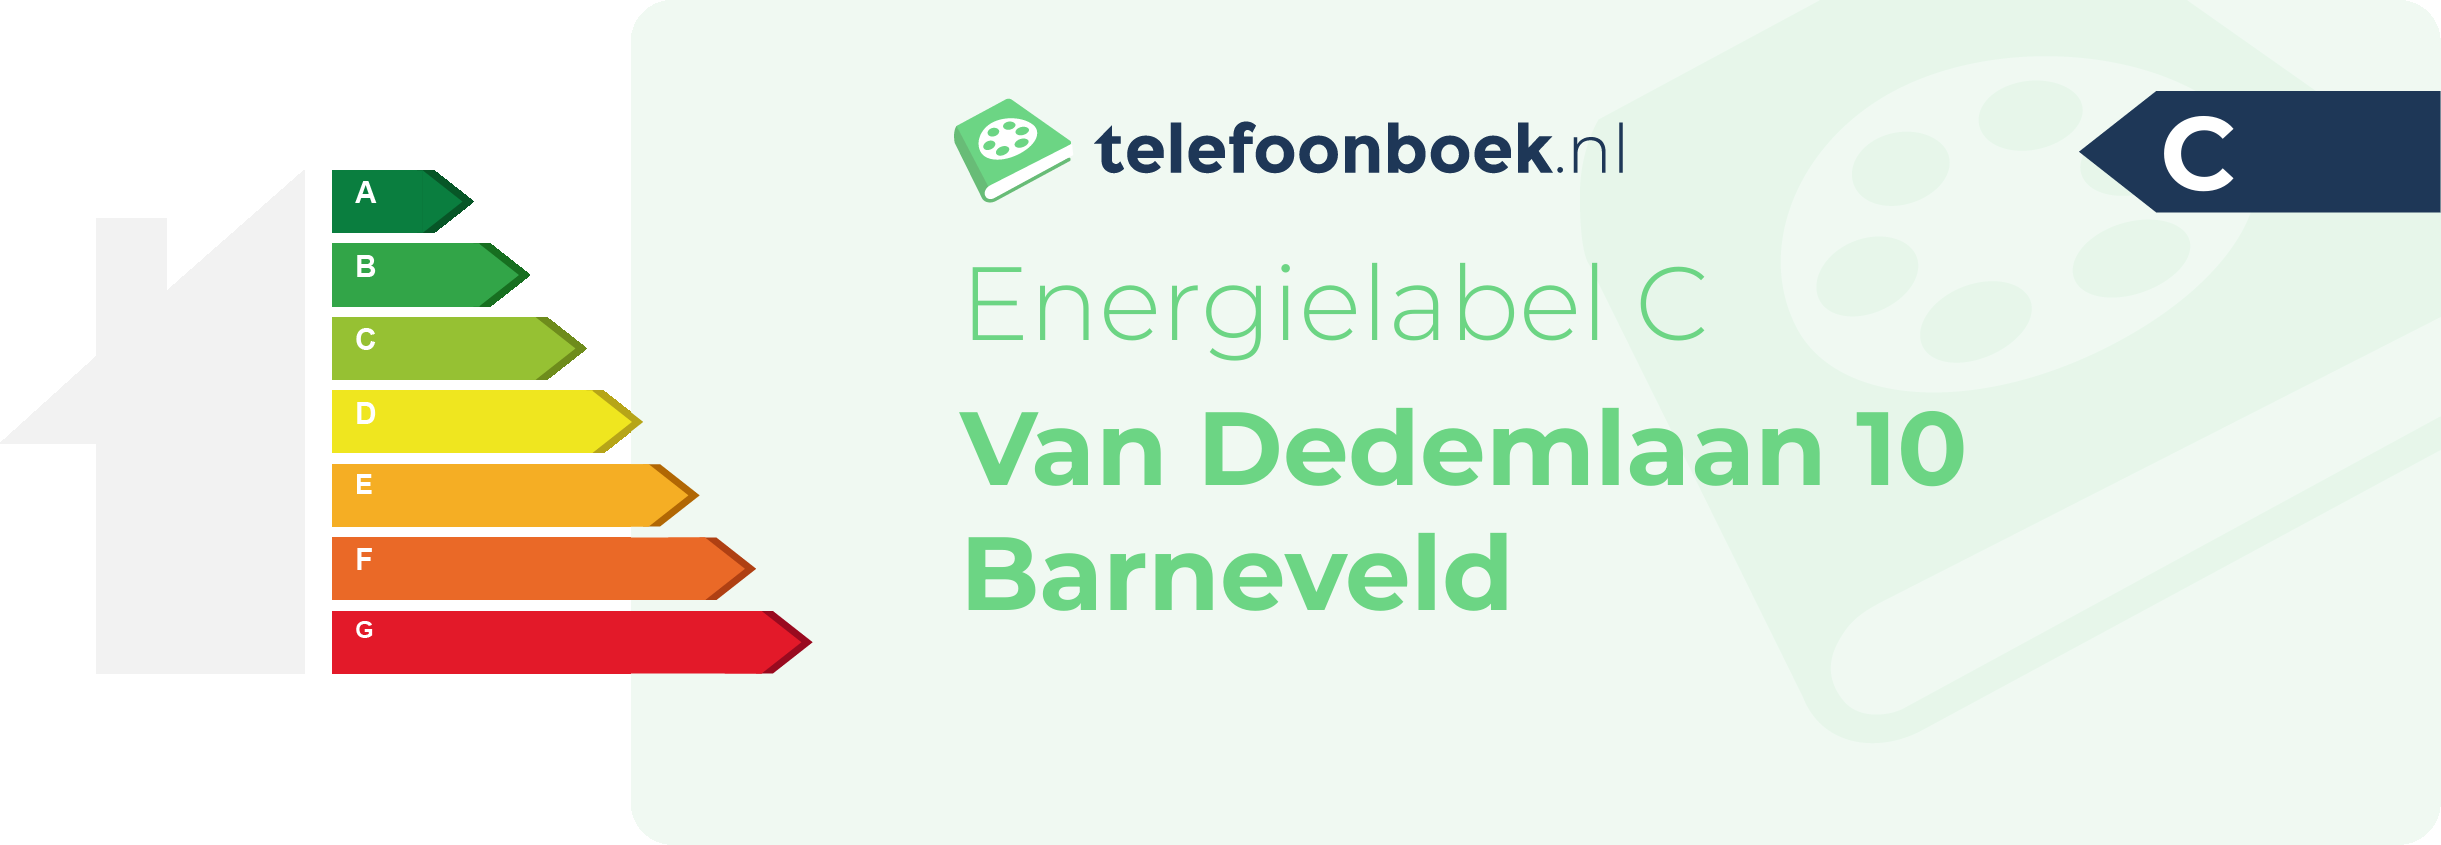 Energielabel Van Dedemlaan 10 Barneveld